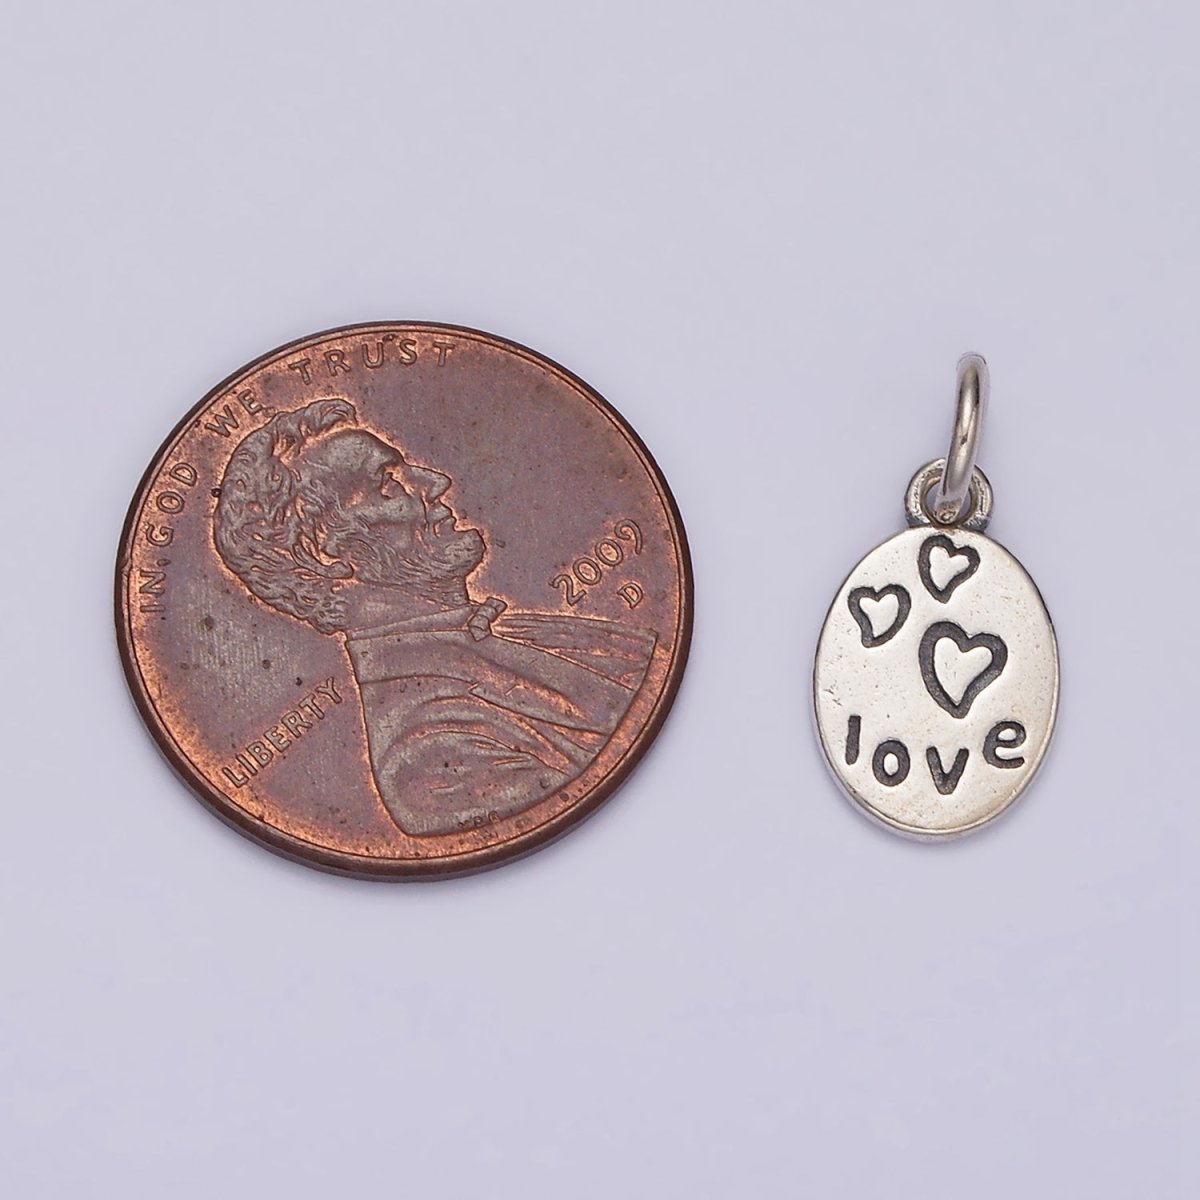 S925 Sterling Silver Triple Heart "LOVE" Script Engraved Oval Charm | SL-361 - DLUXCA